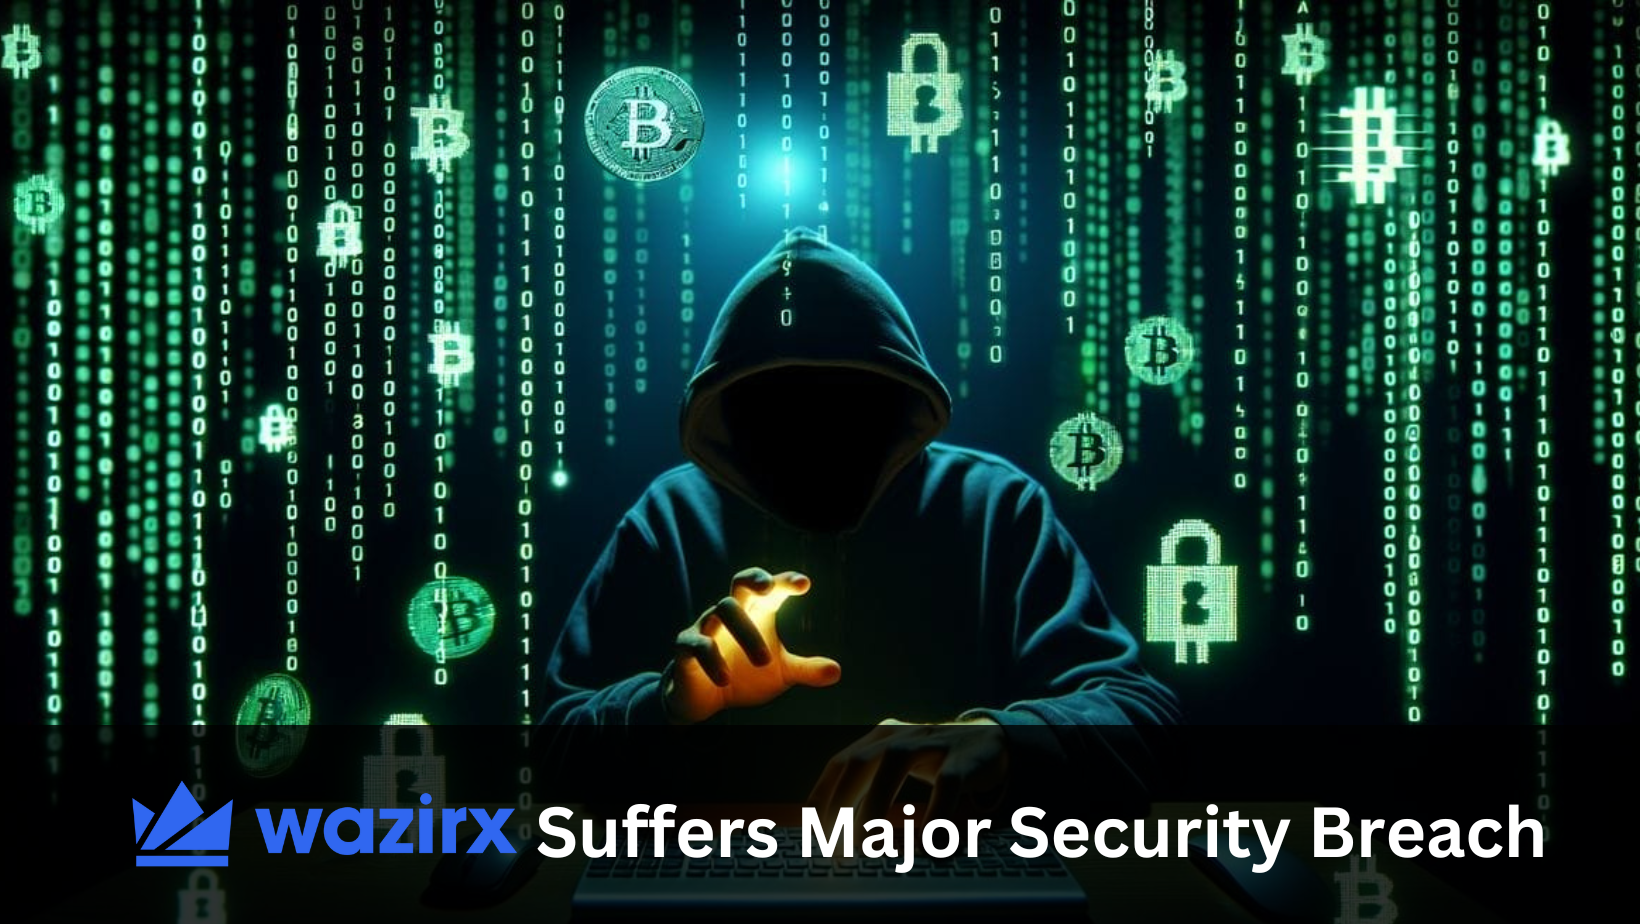 WazirX Suffers Major Security Breach: $230 Million Transferred to Suspicious Address